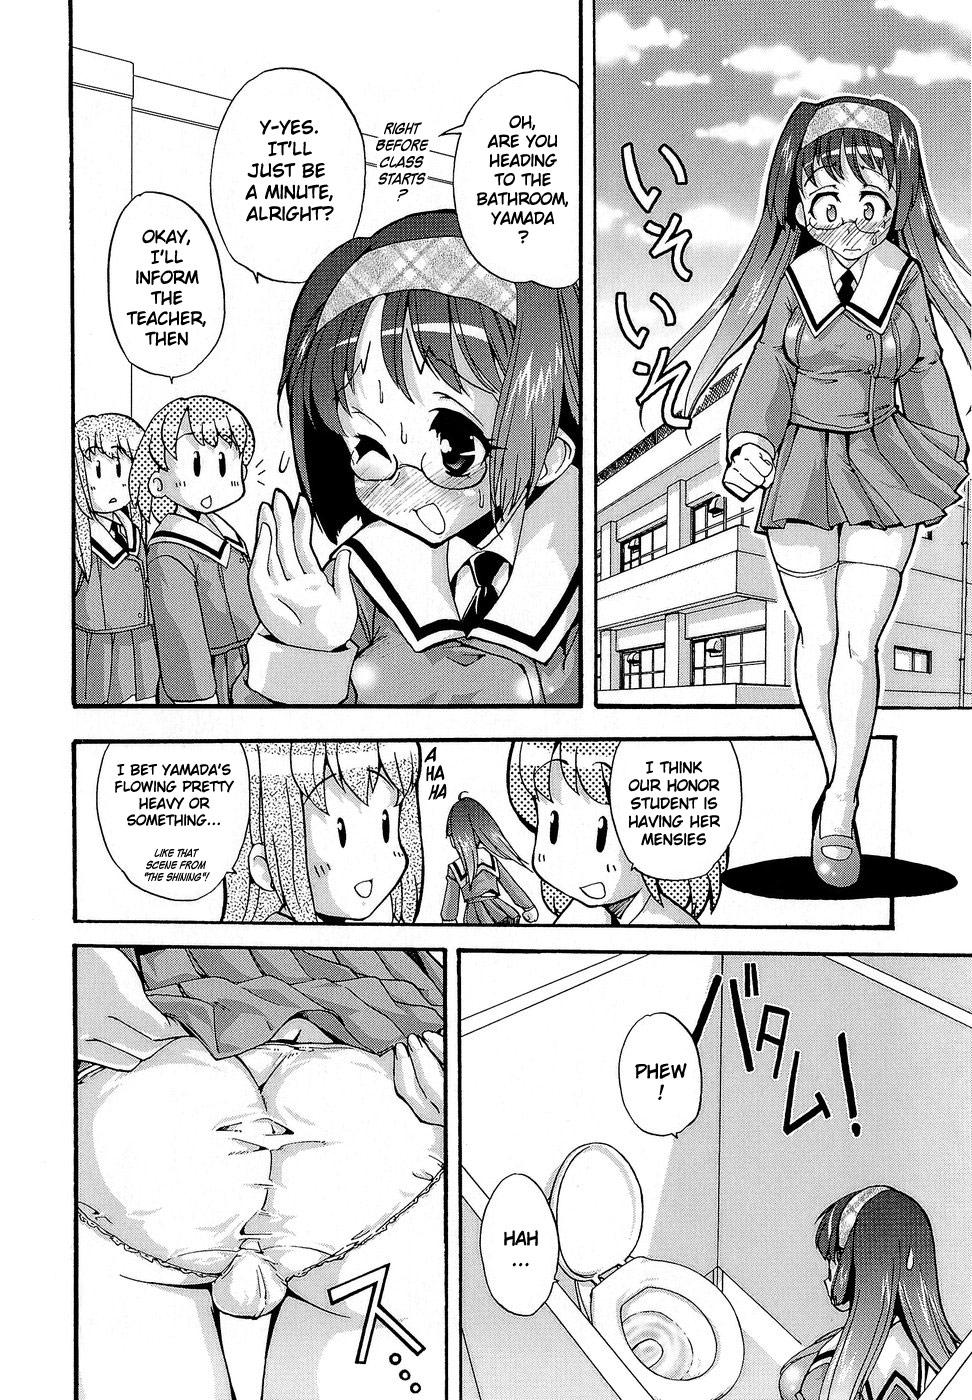 Slapping Futachu Cdmx - Page 3